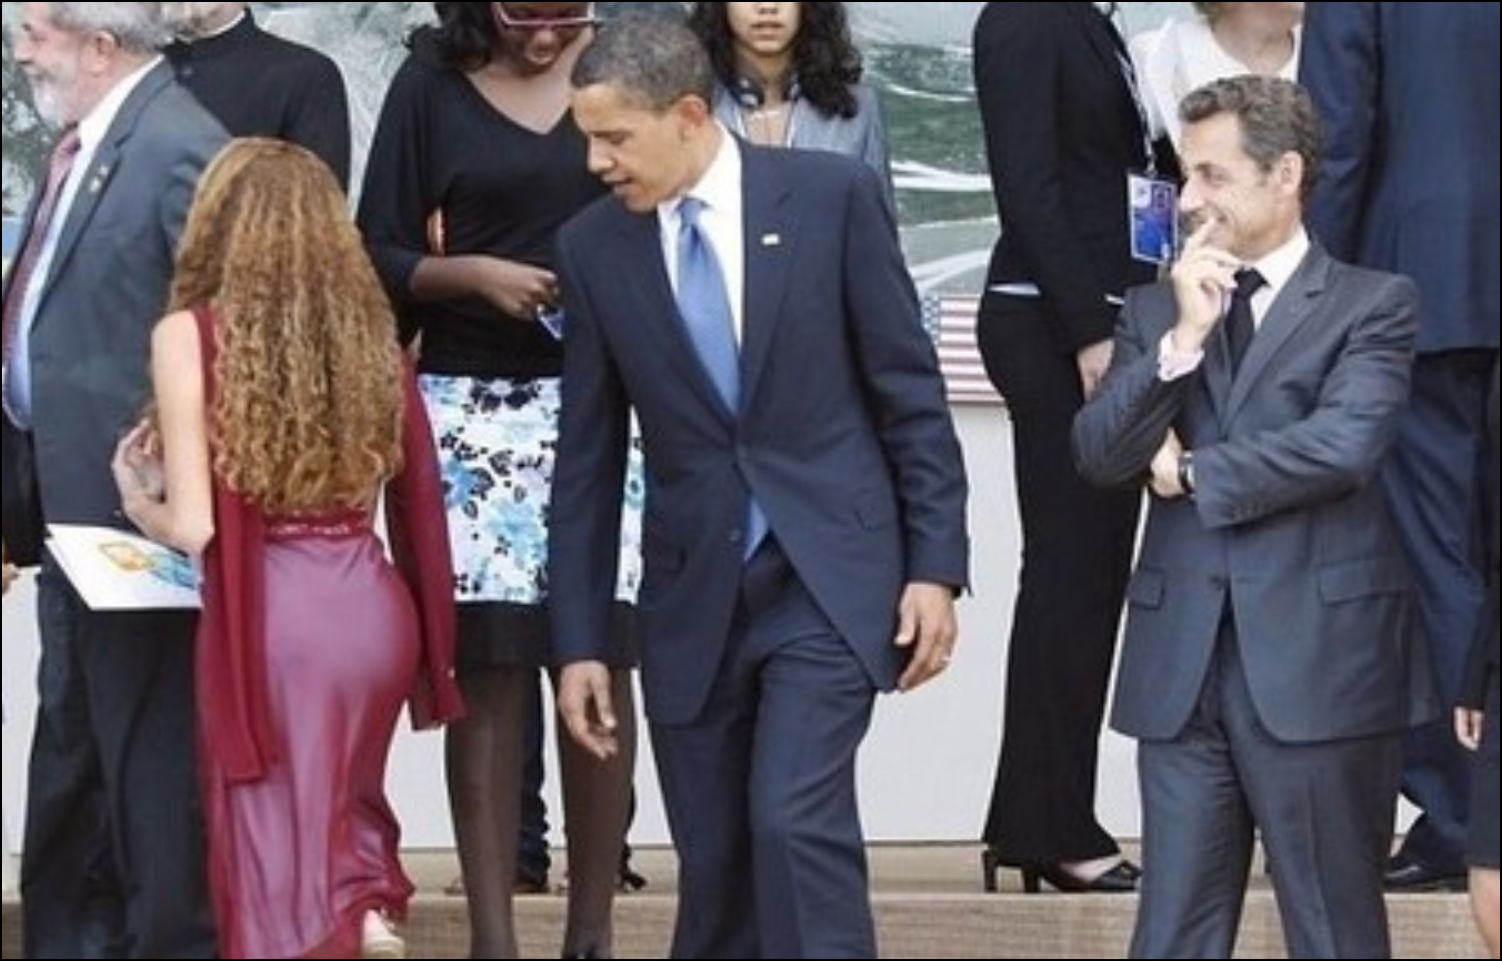 swedish private porn blonde woman porn tube #BarackObama #Obama #Ass #Dress #FineAss #Sarkozy #NicolasSarkozy #Suit #Suits #Celebrity #President #USA #Brazil #MayaraTavares #VivaBrazil